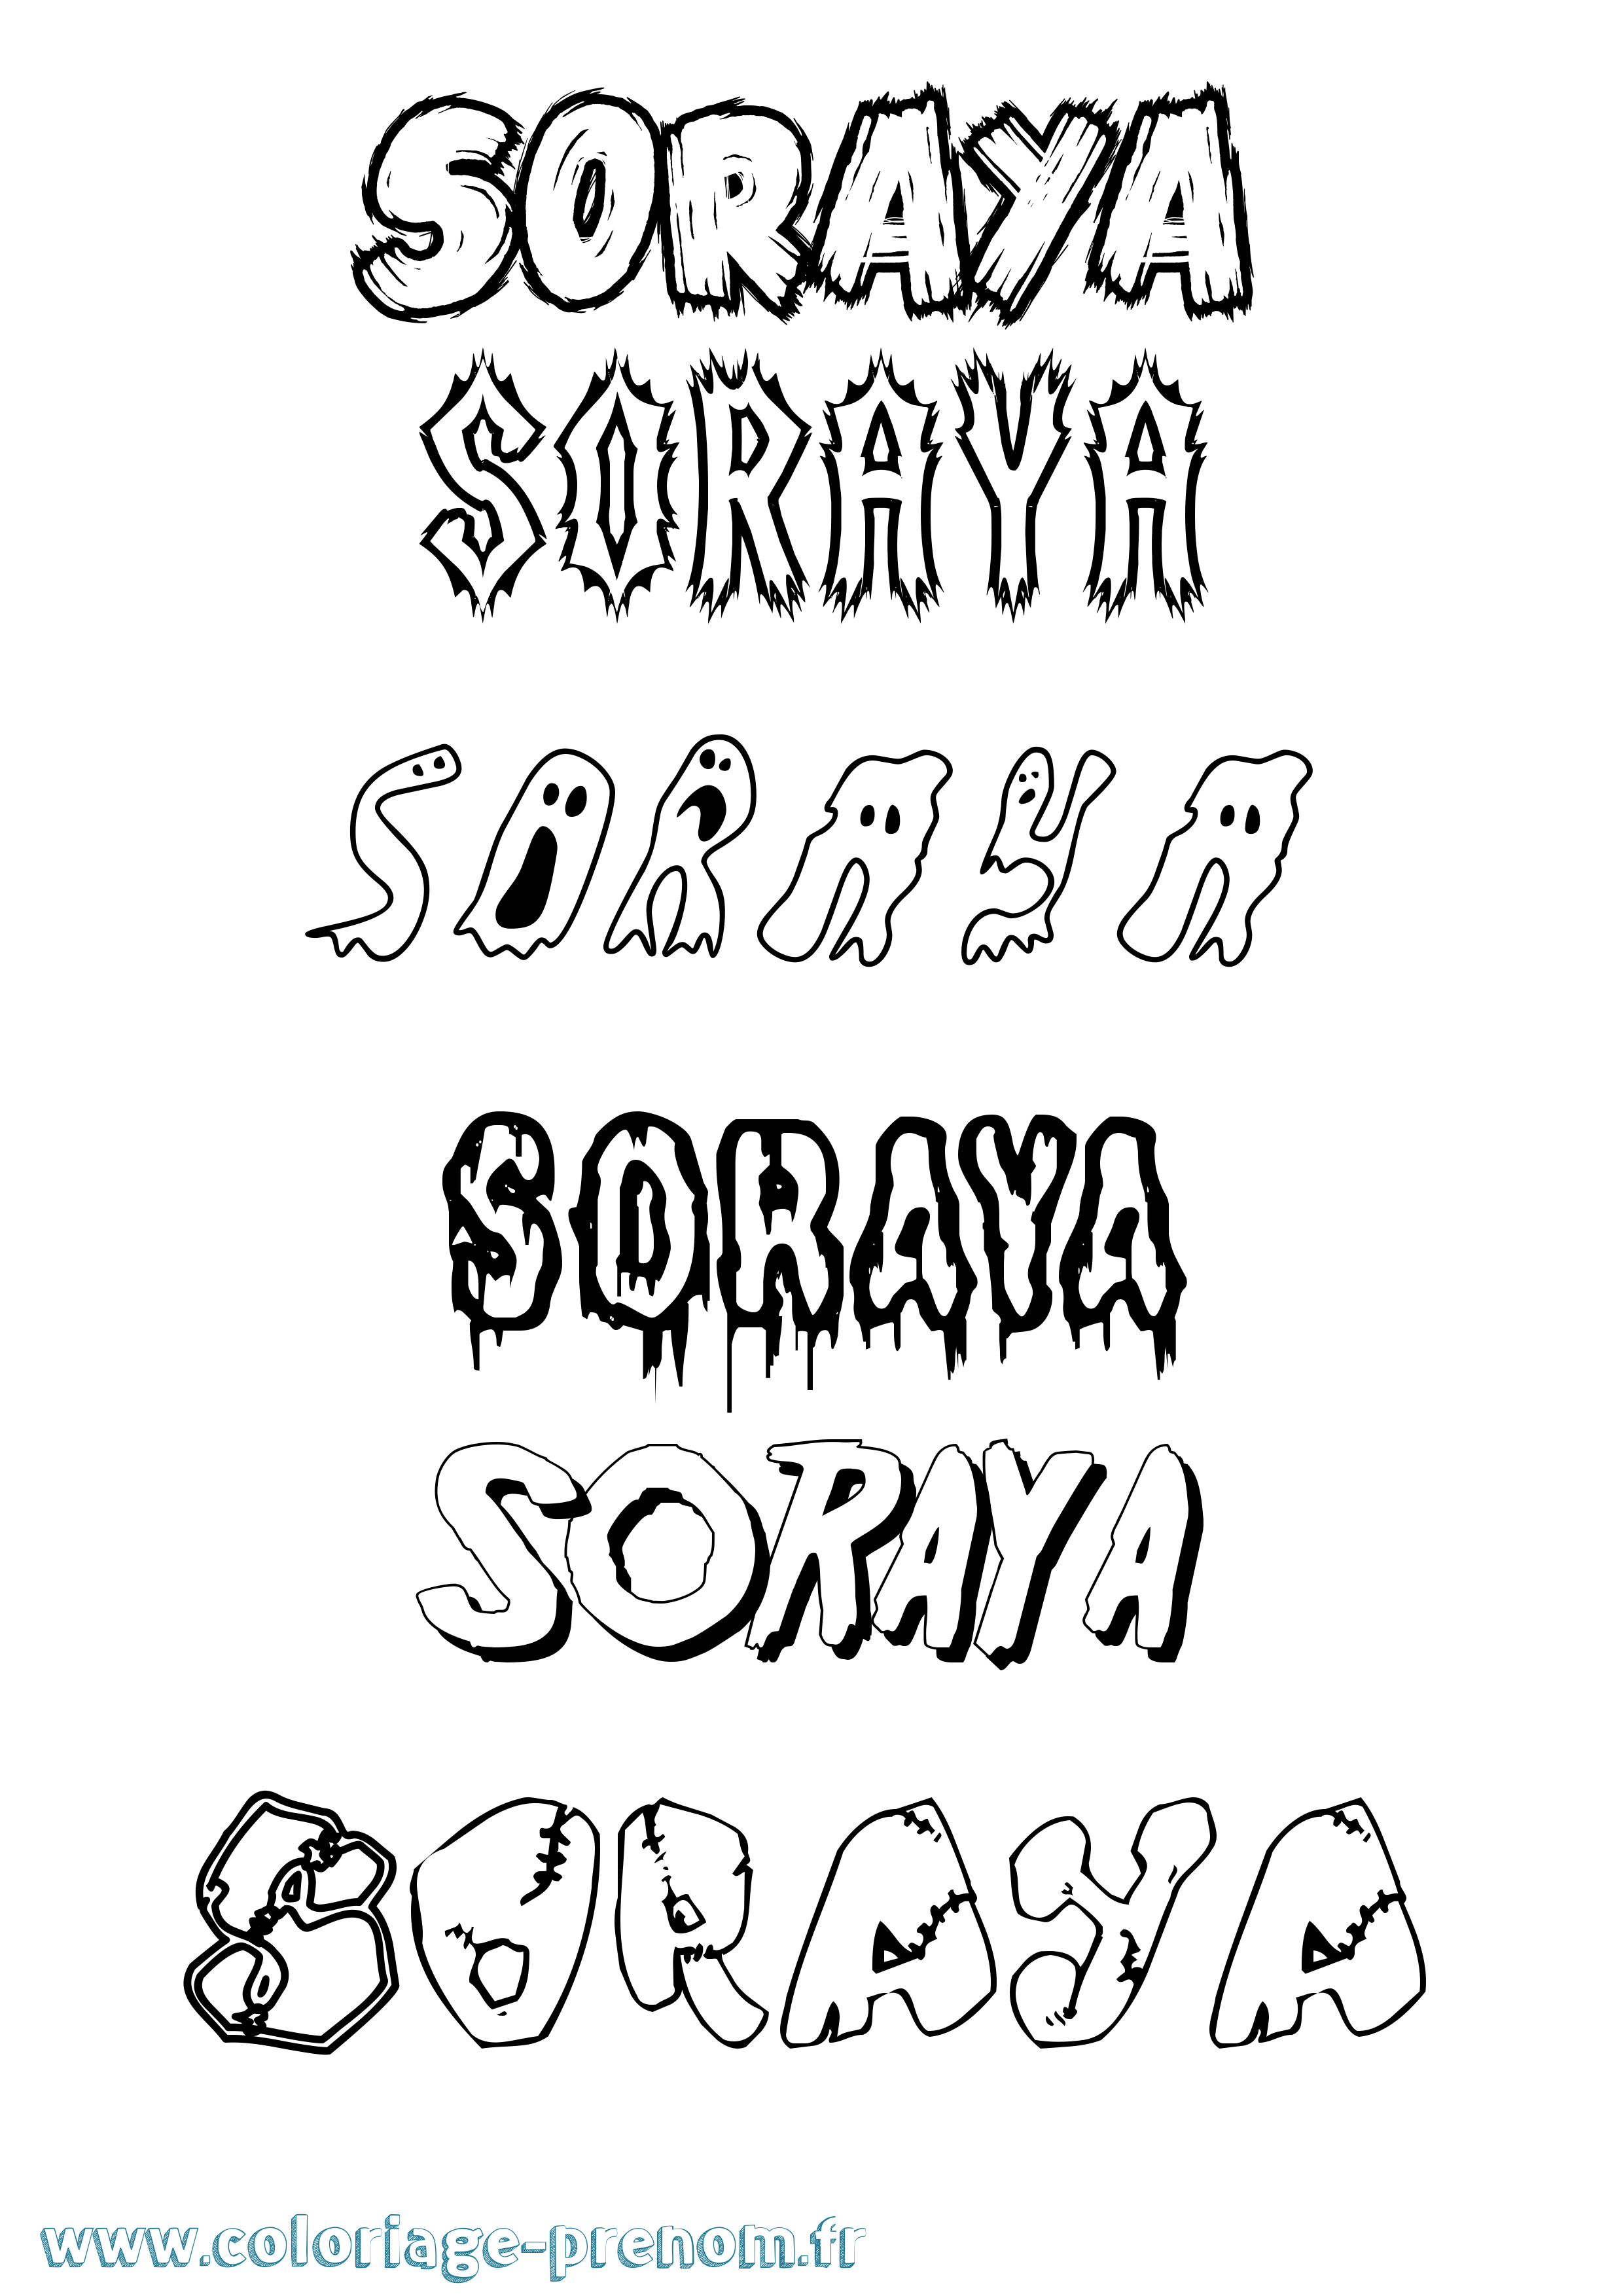 Coloriage prénom Soraya